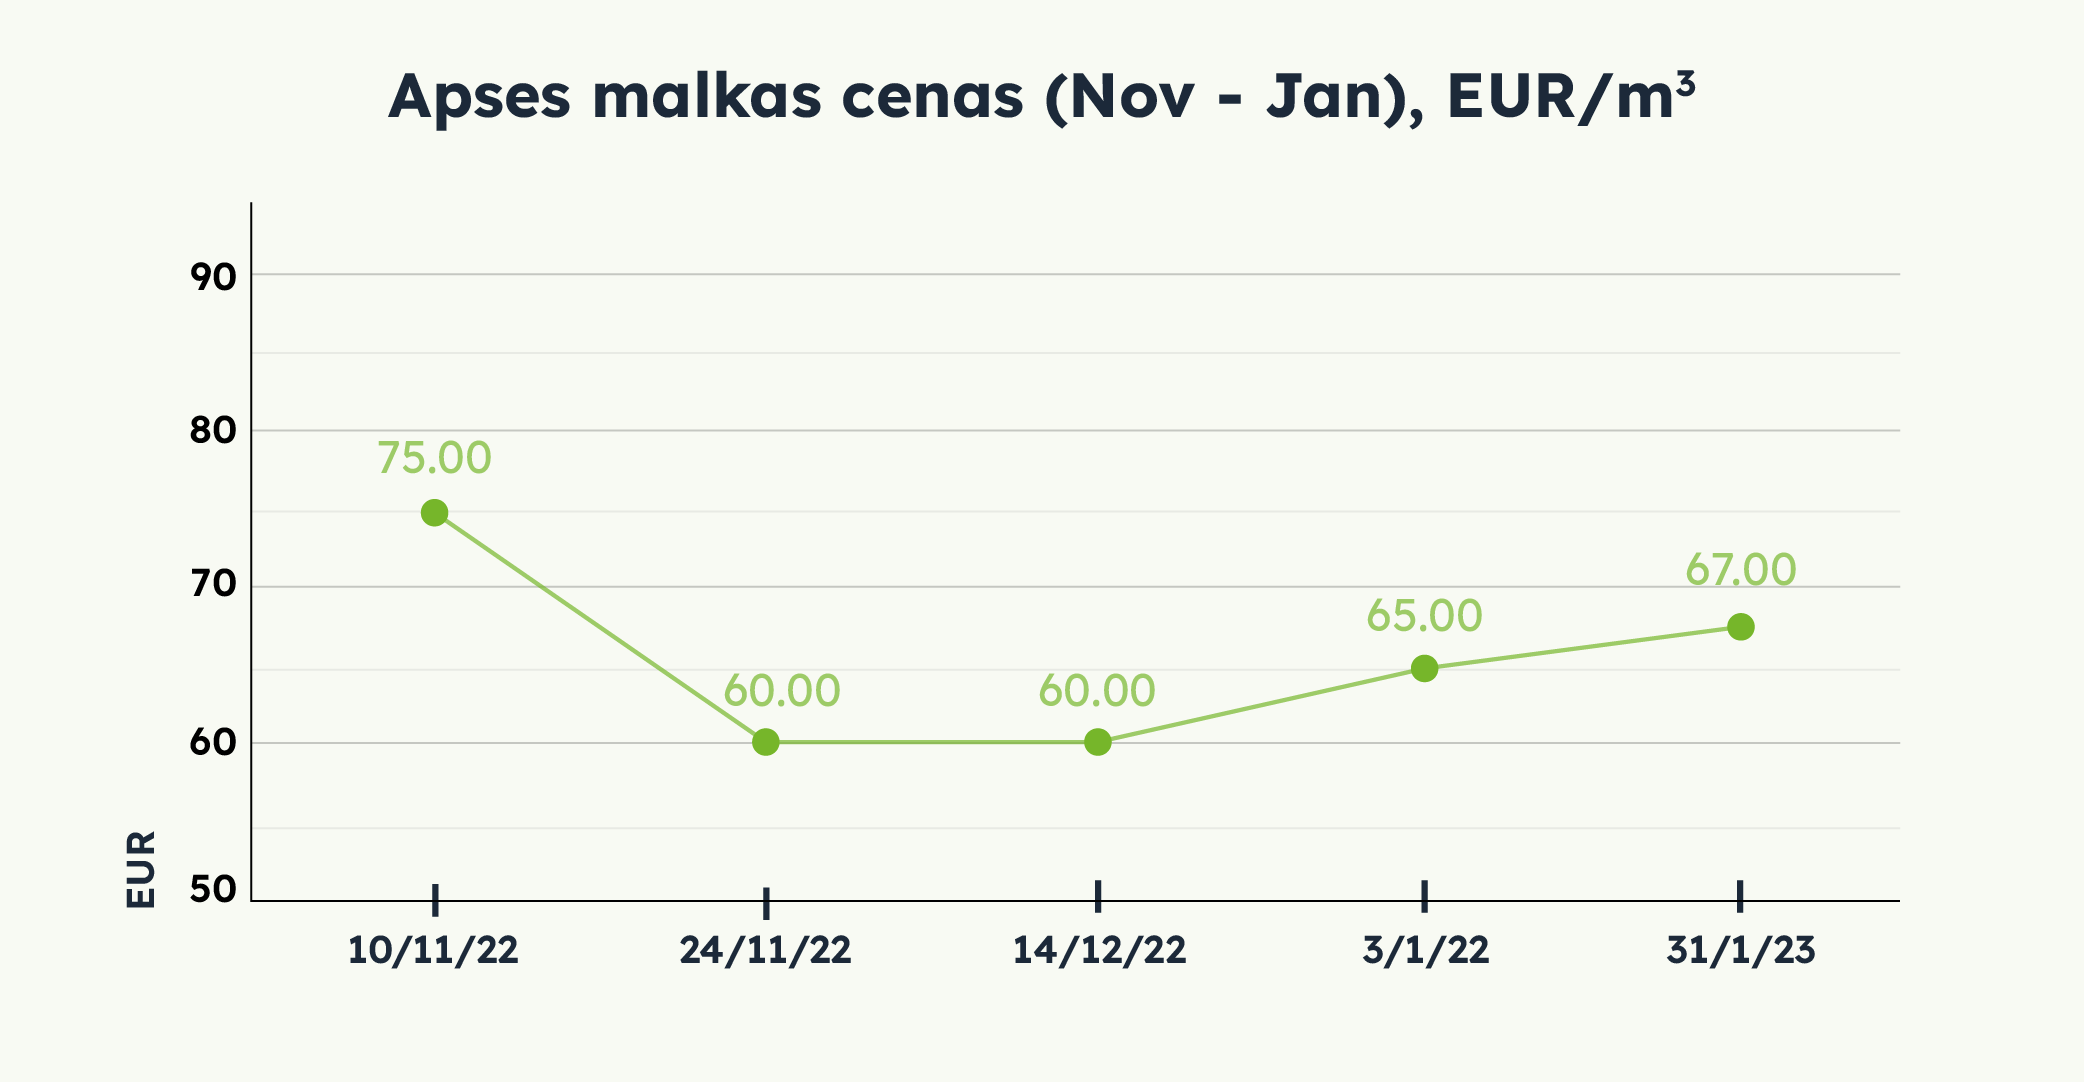 Apses malkas cenas (Nov - Jan), EUR/m3